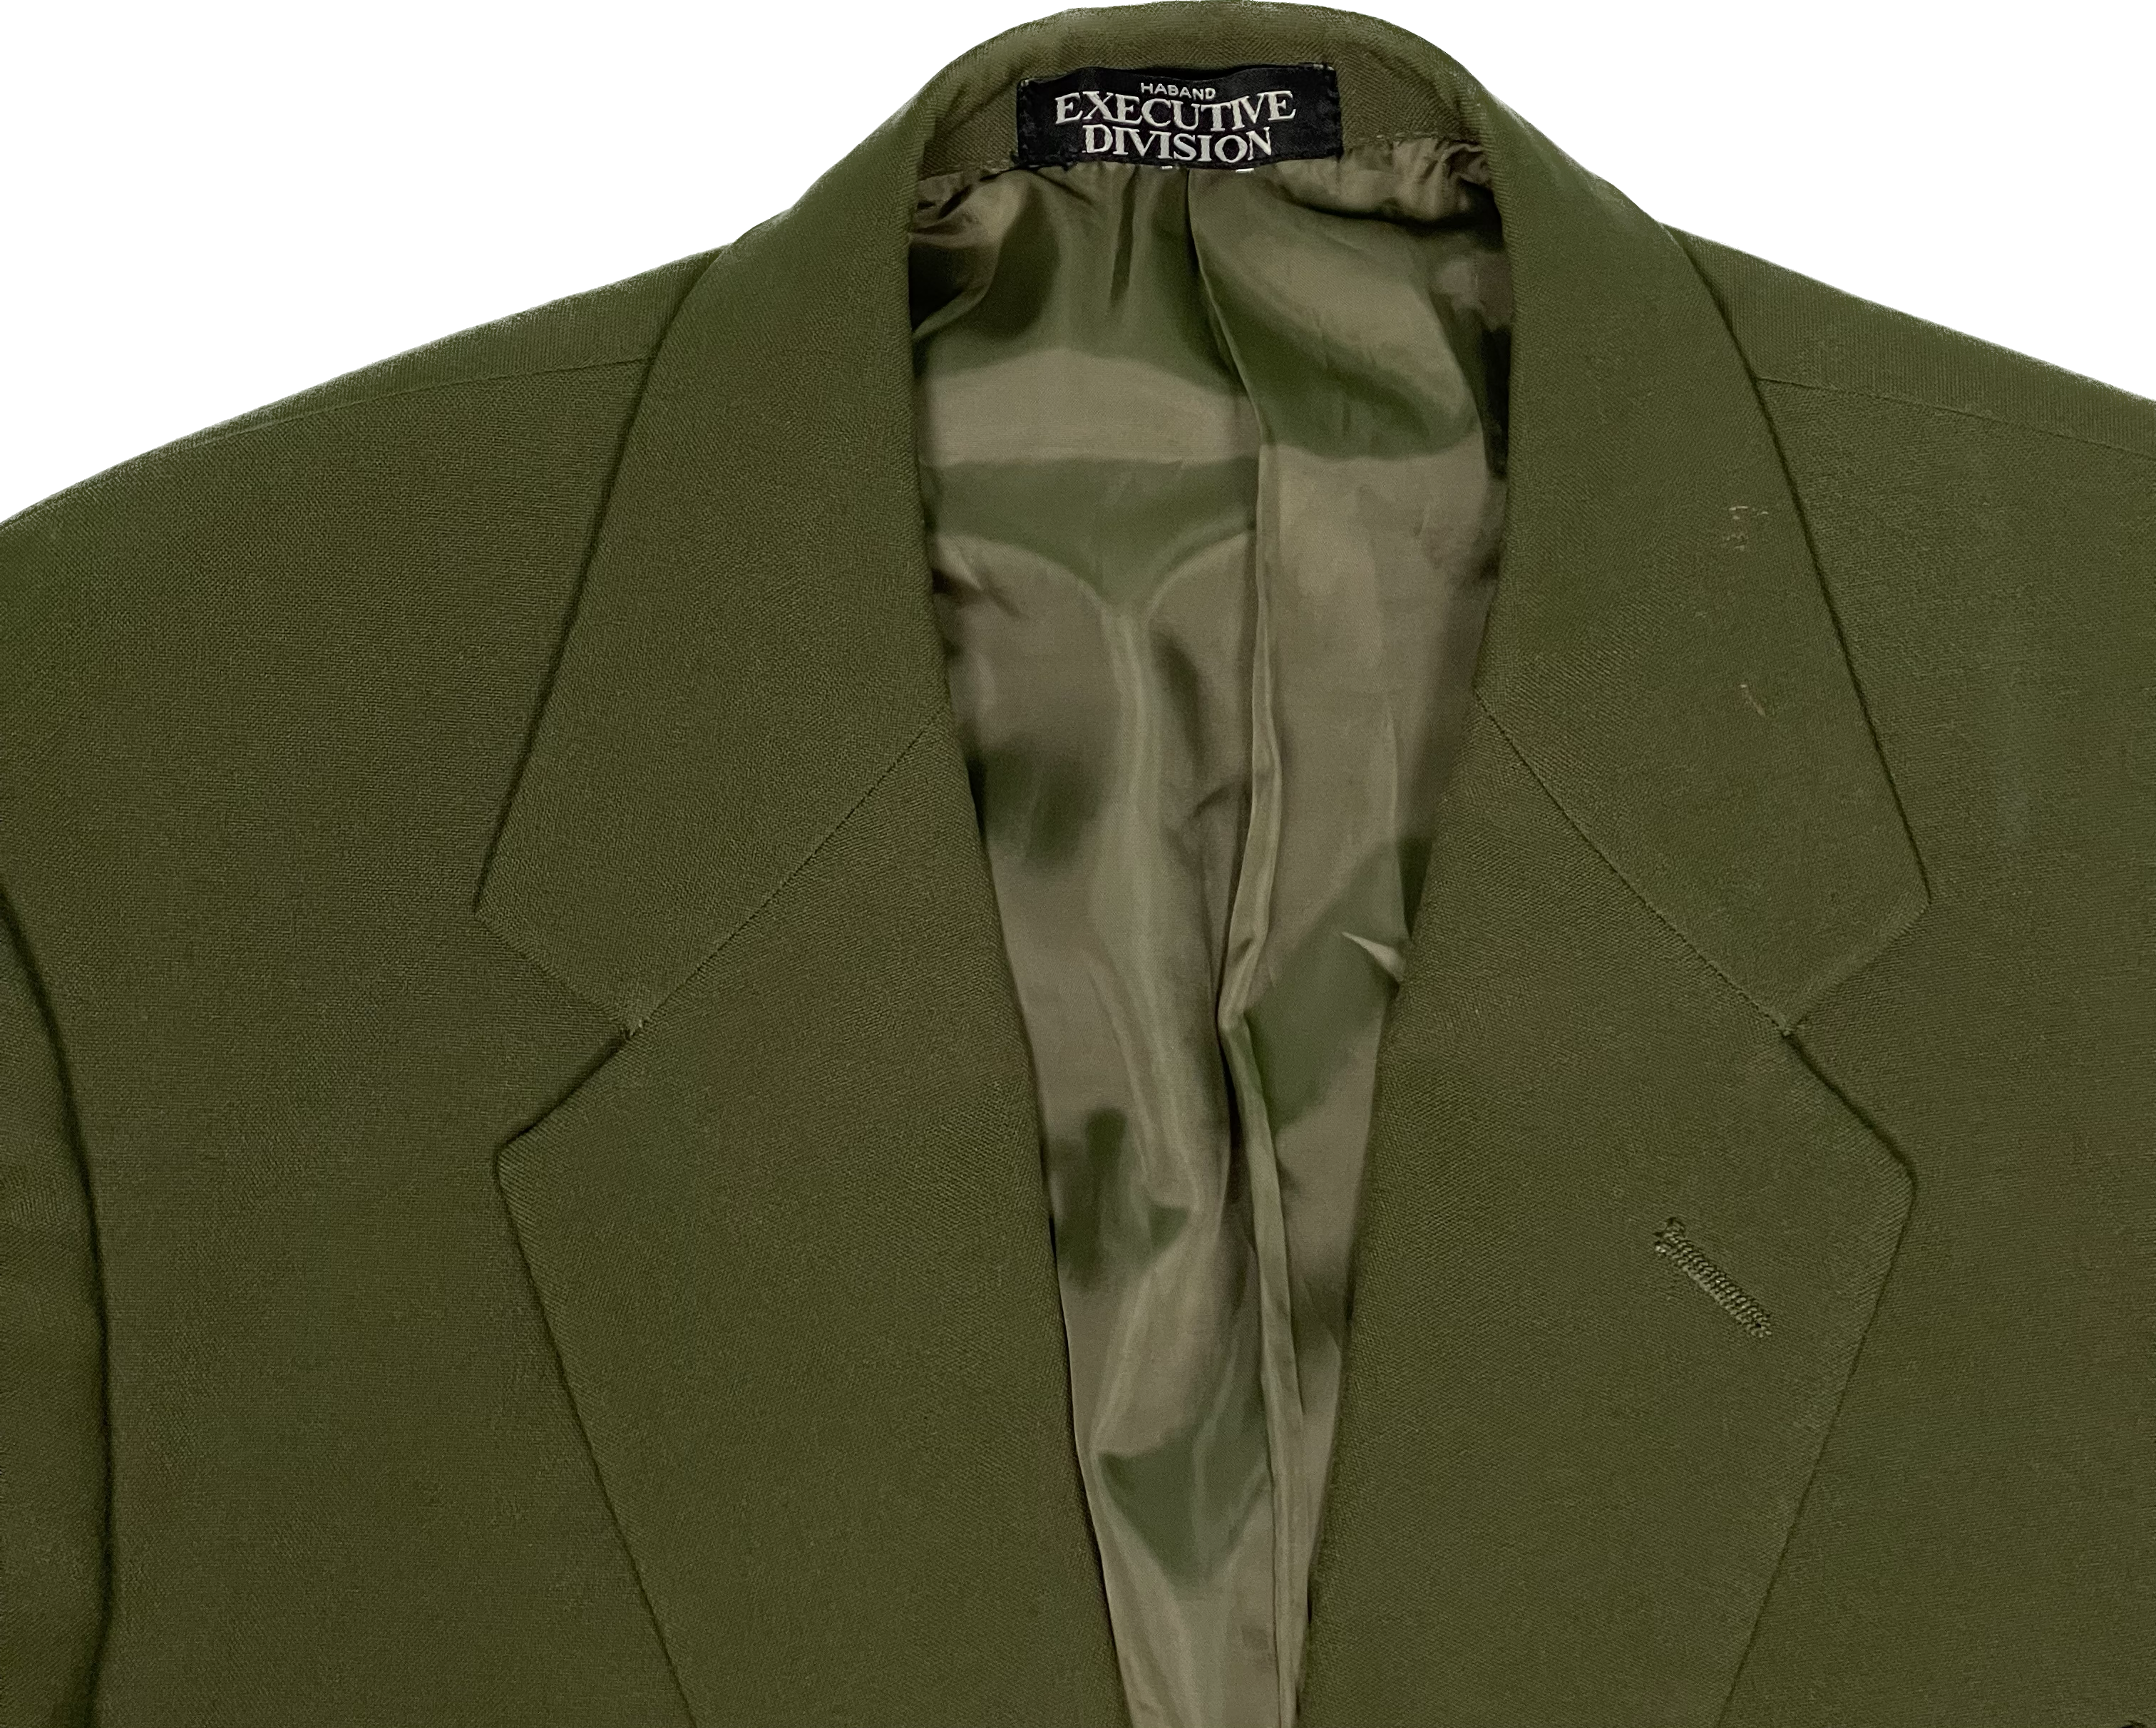 Habano Exclusive Division Suit Jacket / Blazer